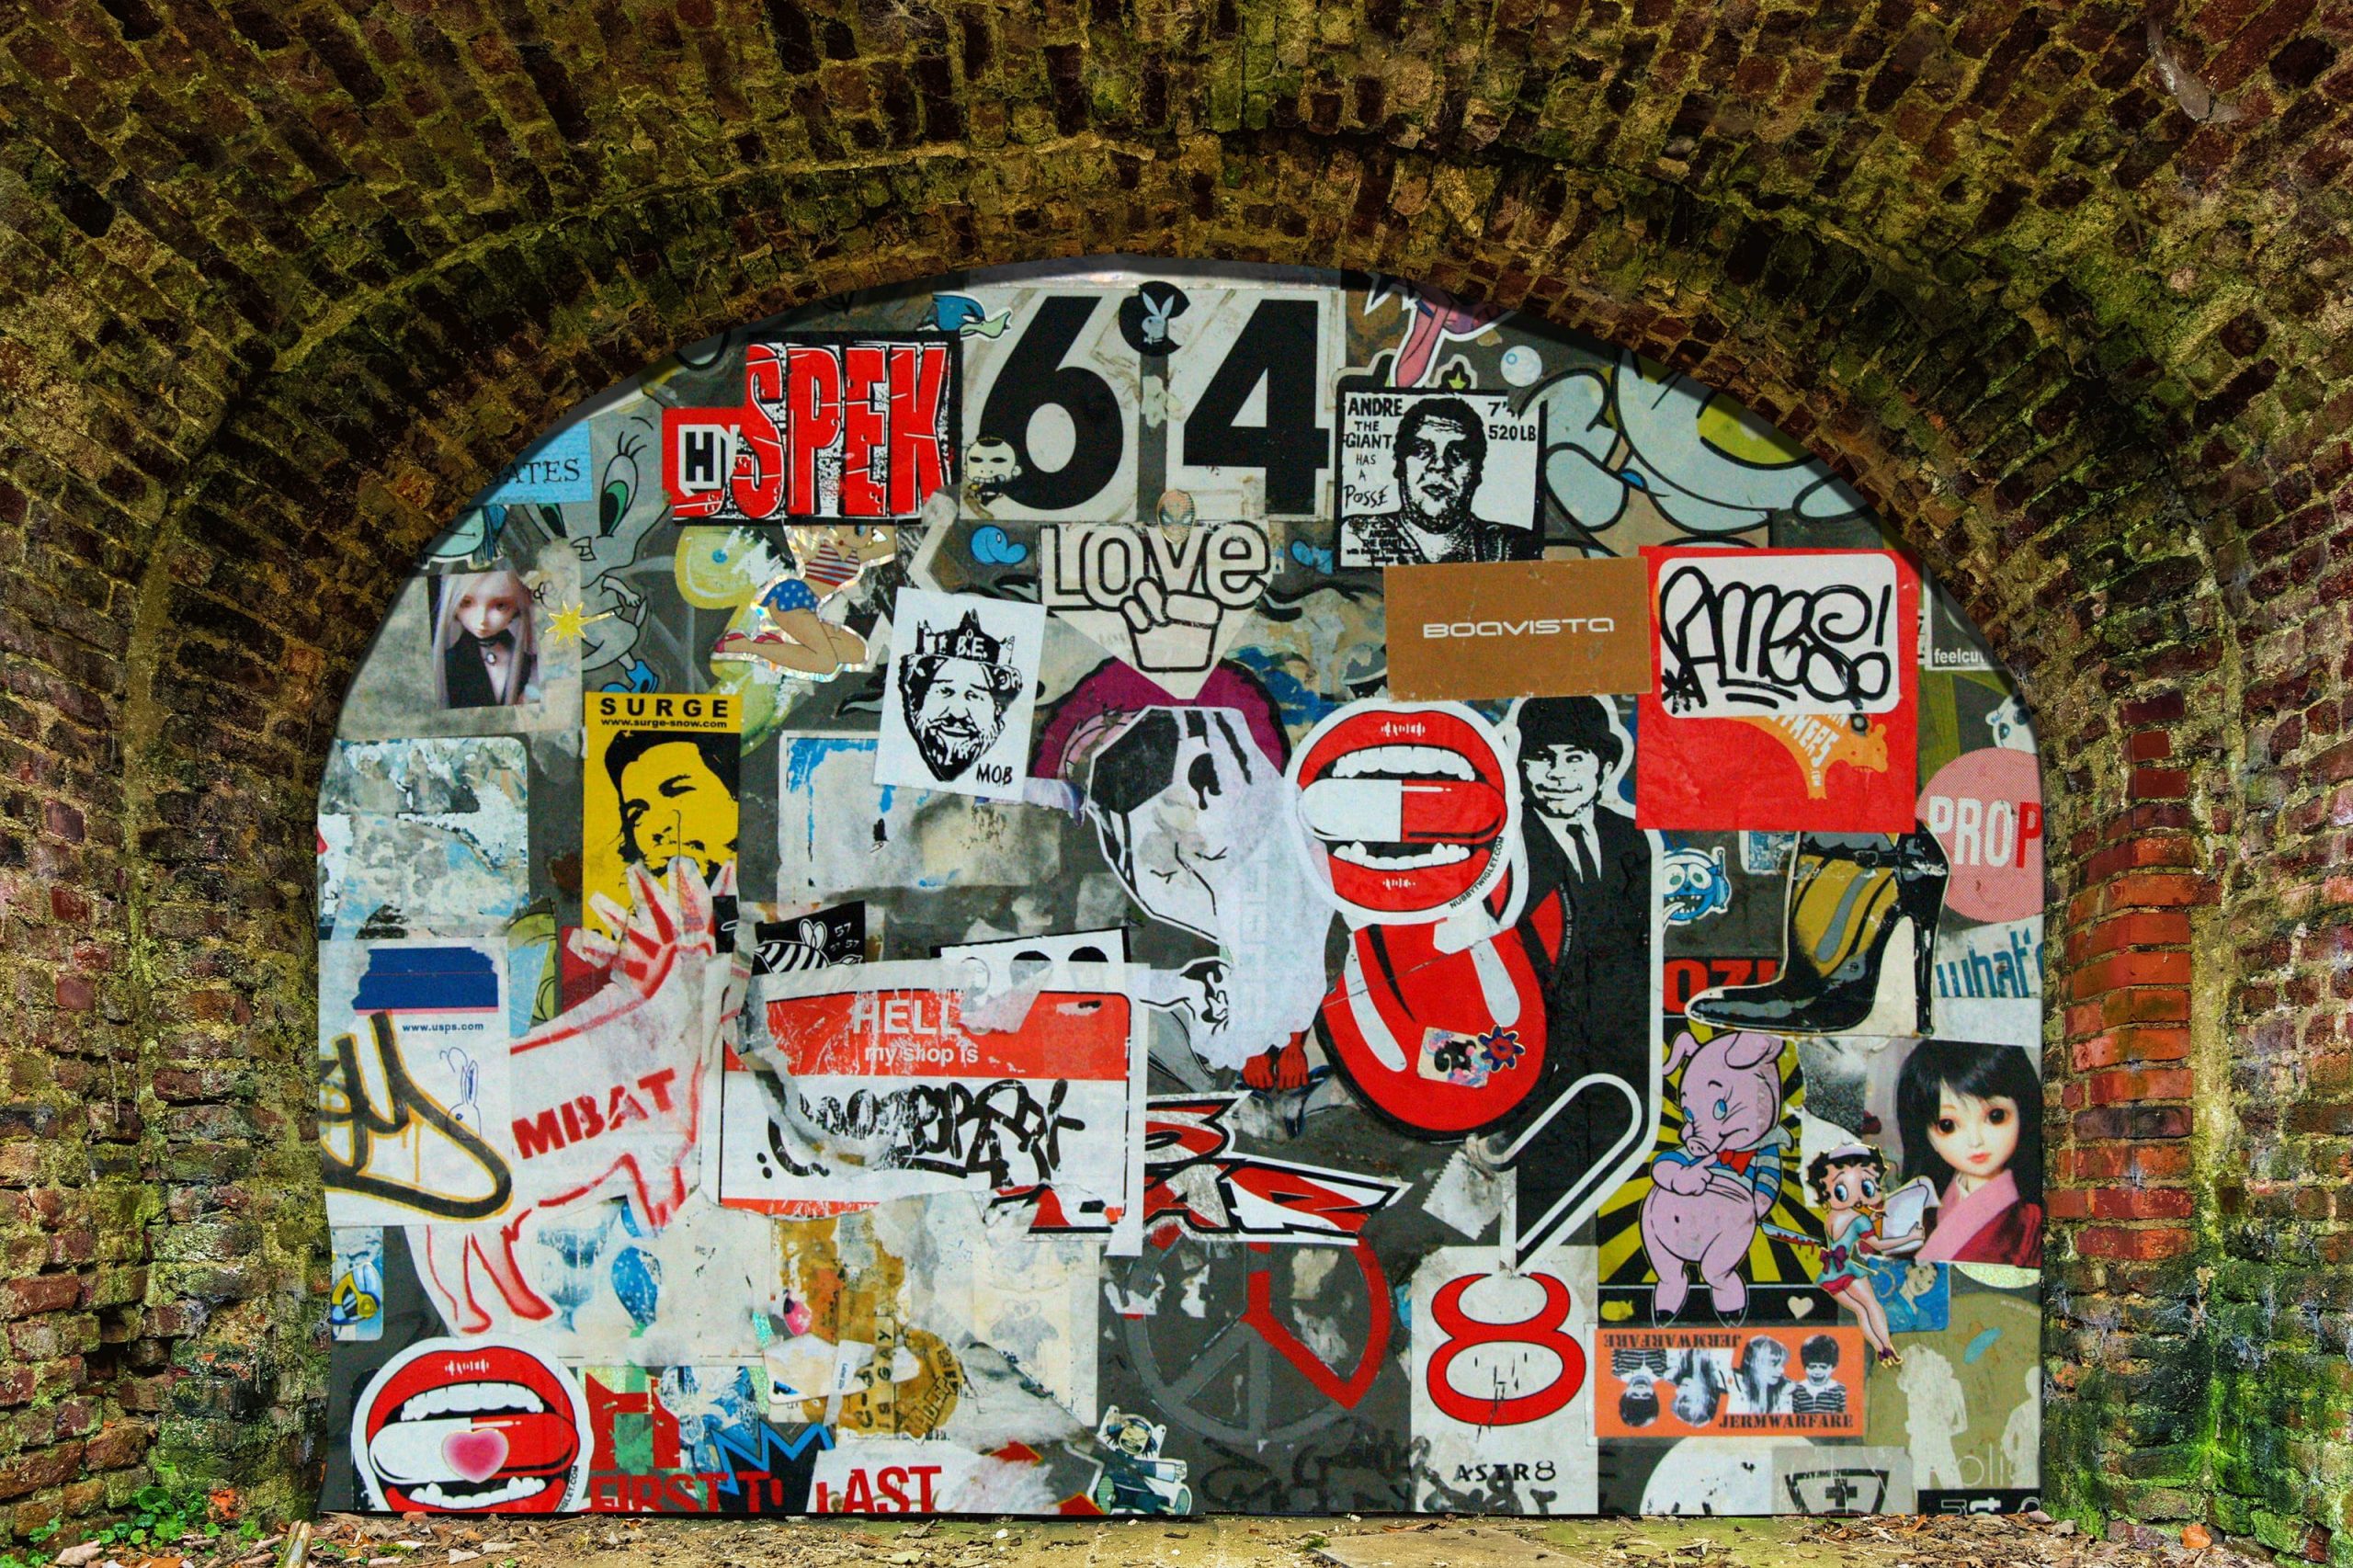 Graffiti wallpaper, door, design, old, urban, vintage, artistic, culture